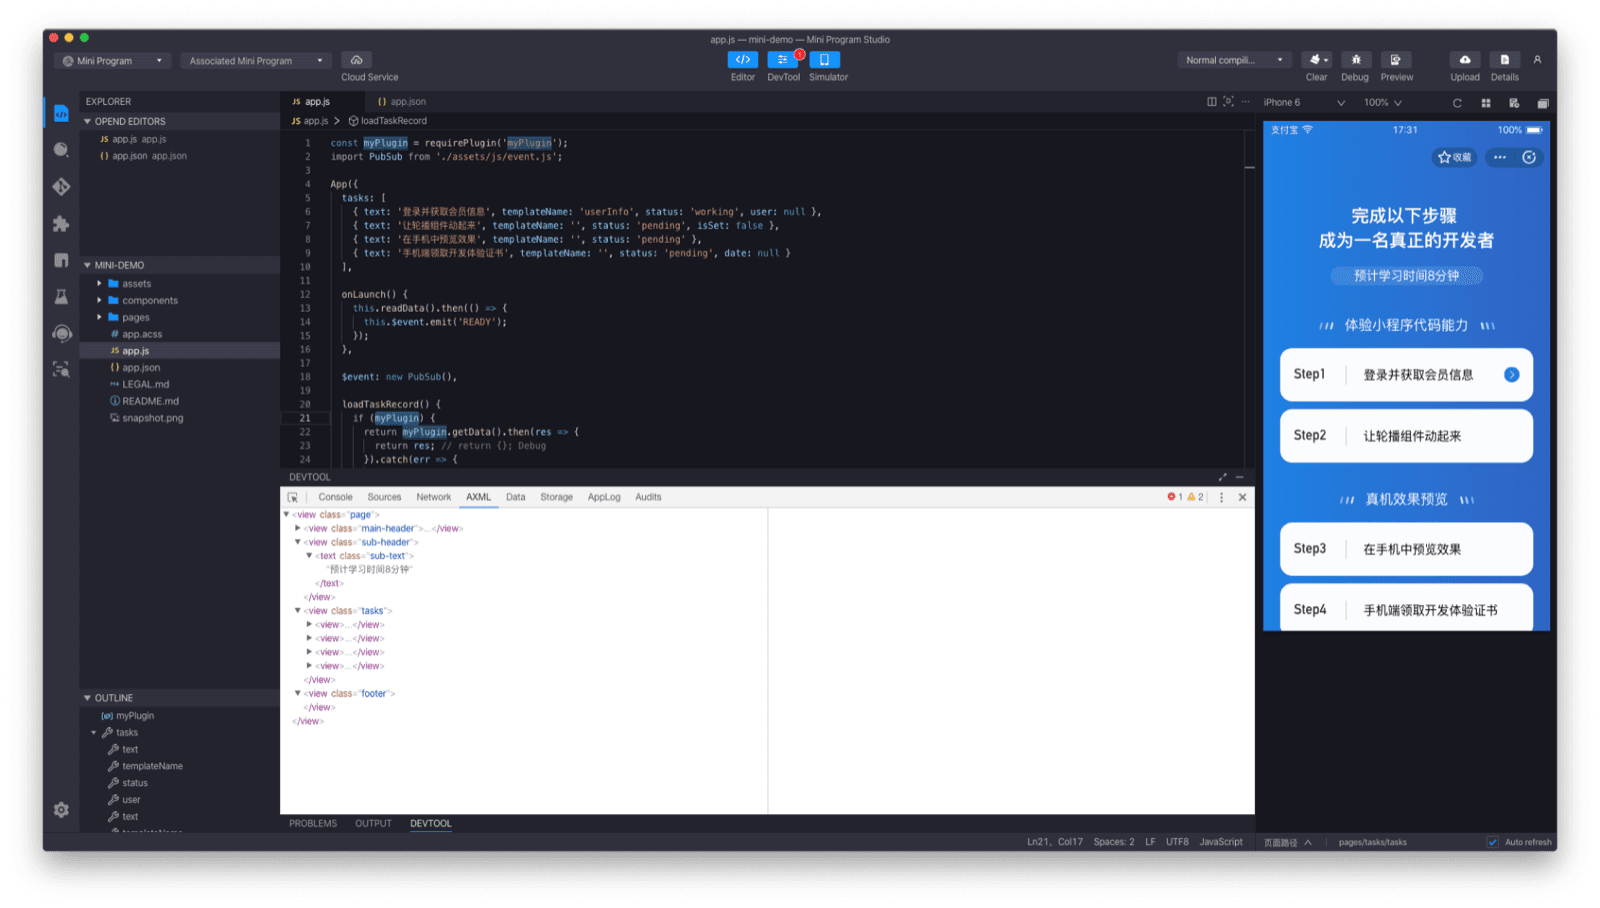 Okno aplikacji Alipay DevTools z edytorem kodu, symulatorem i debugerem.